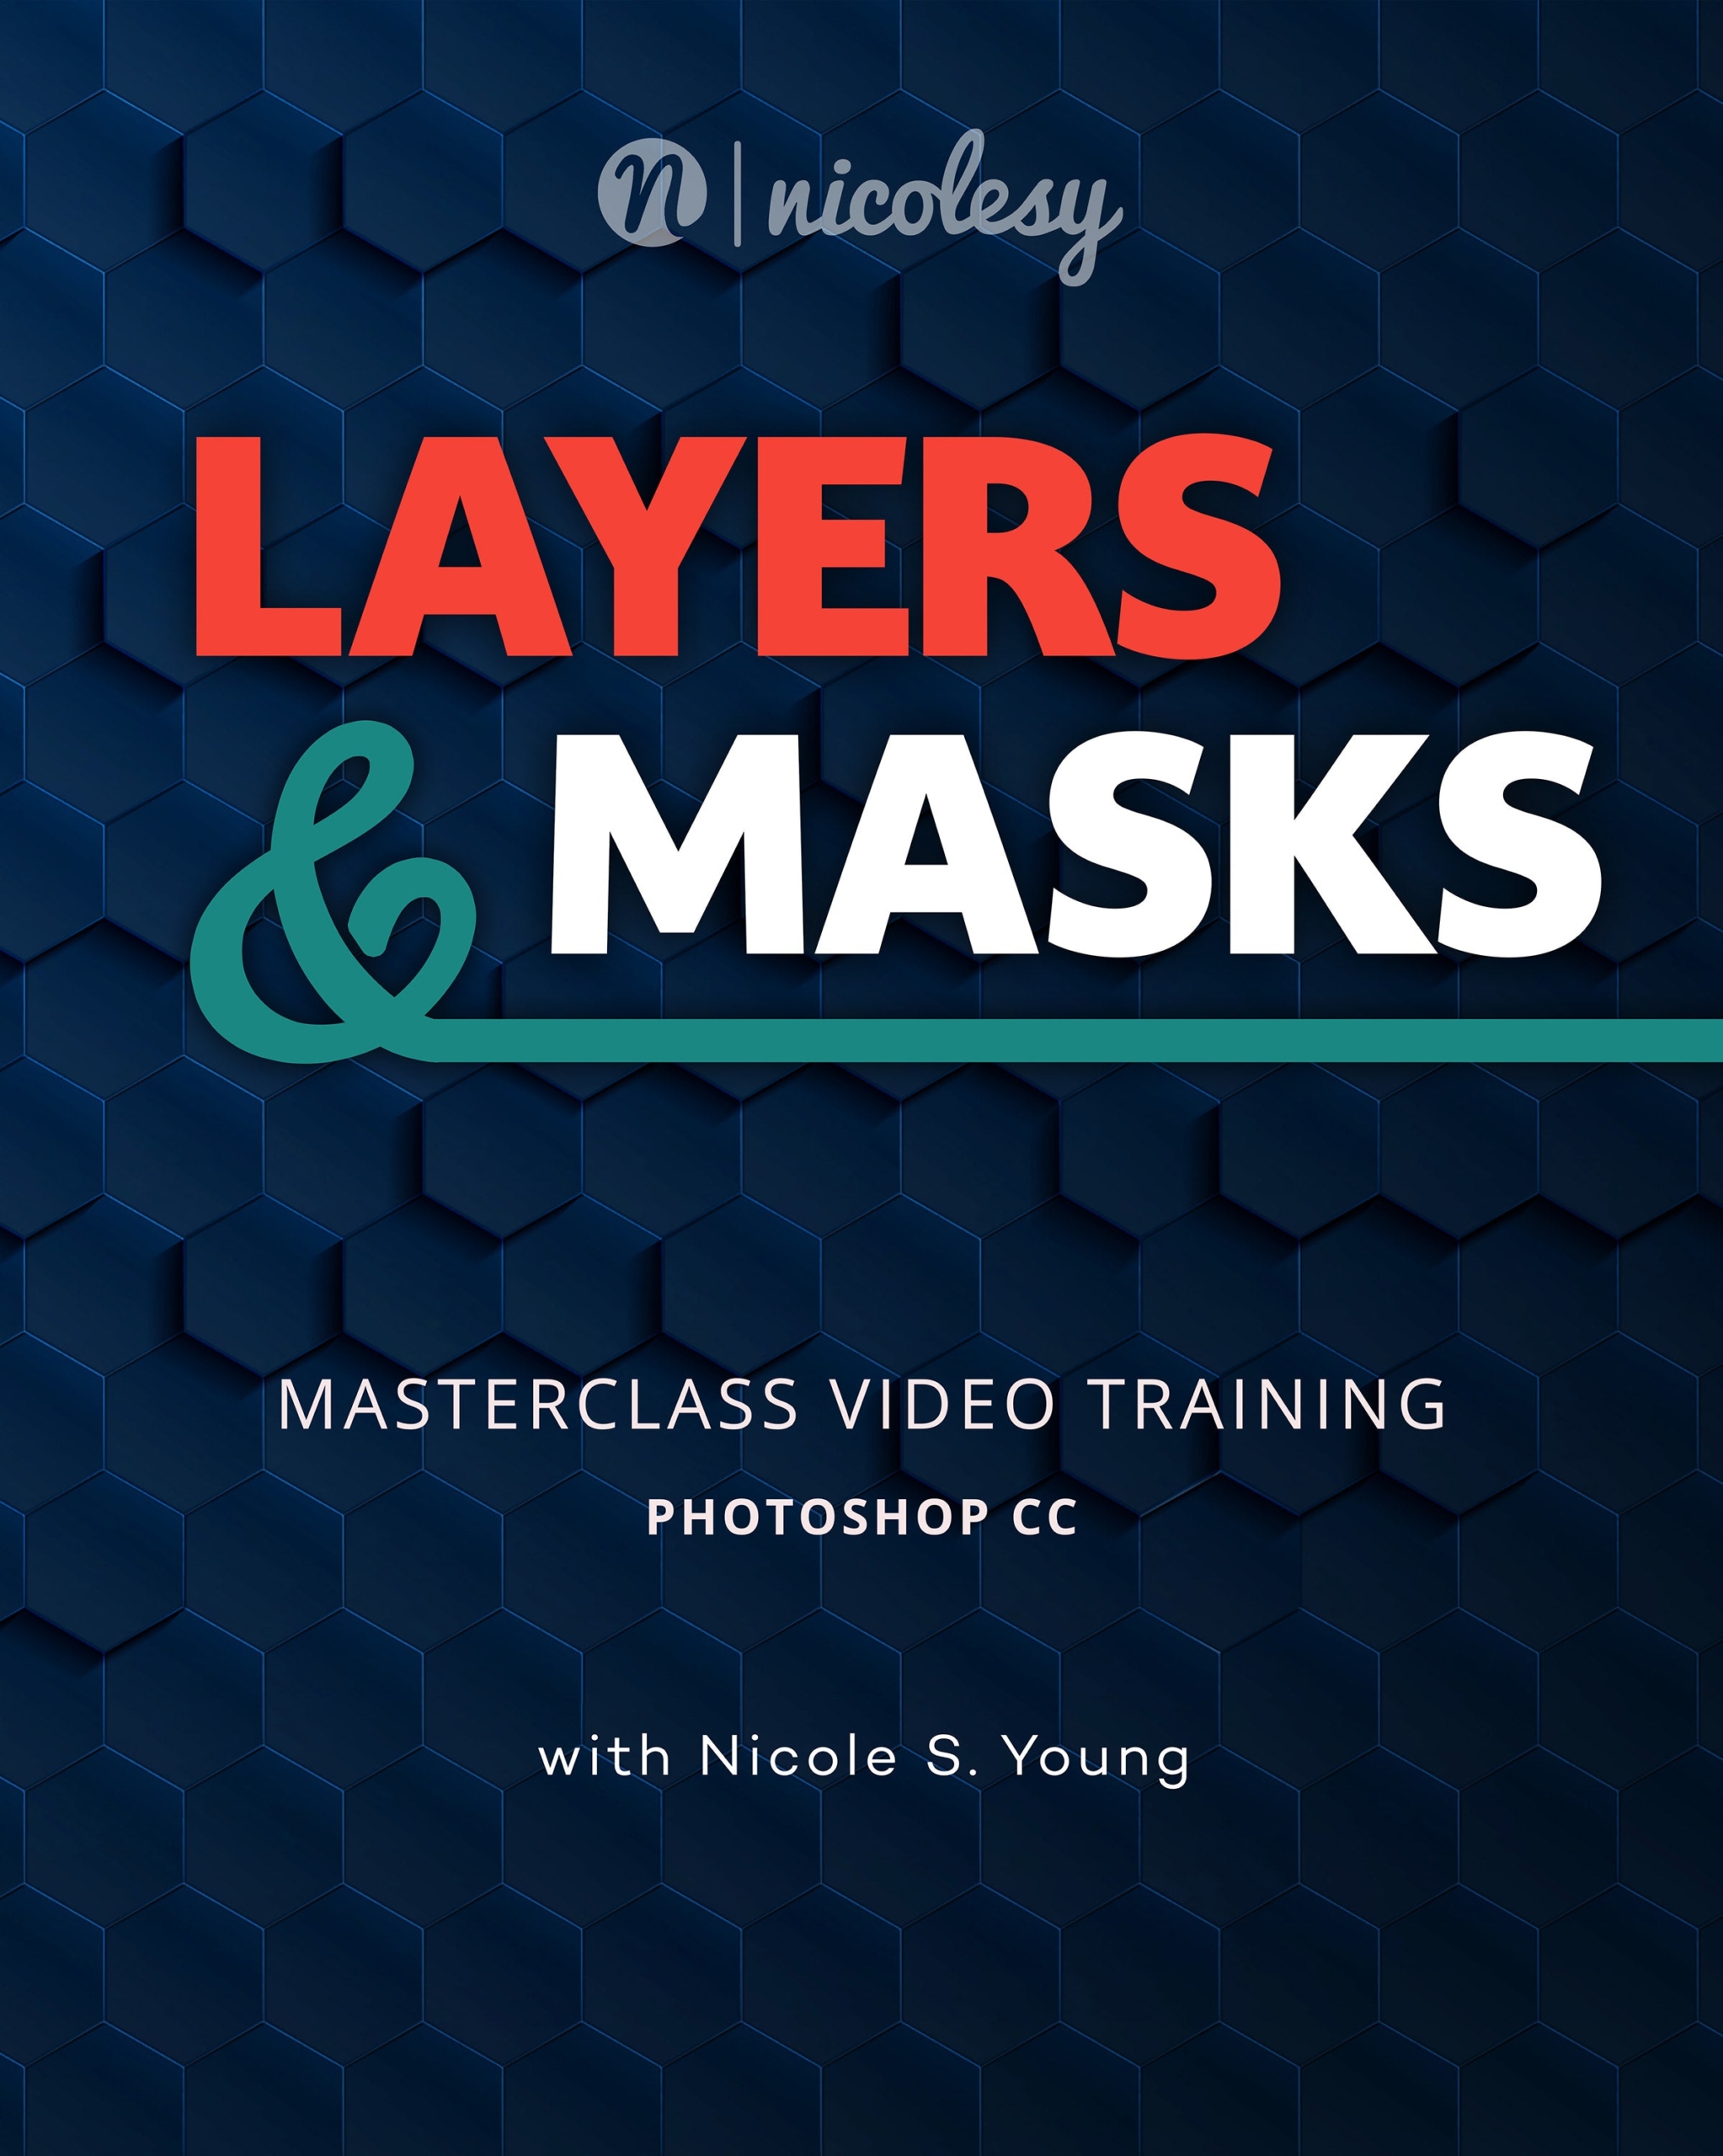 https://nicolesy.com/wp-content/uploads/2022/07/layers_masks_cover-scaled.jpg